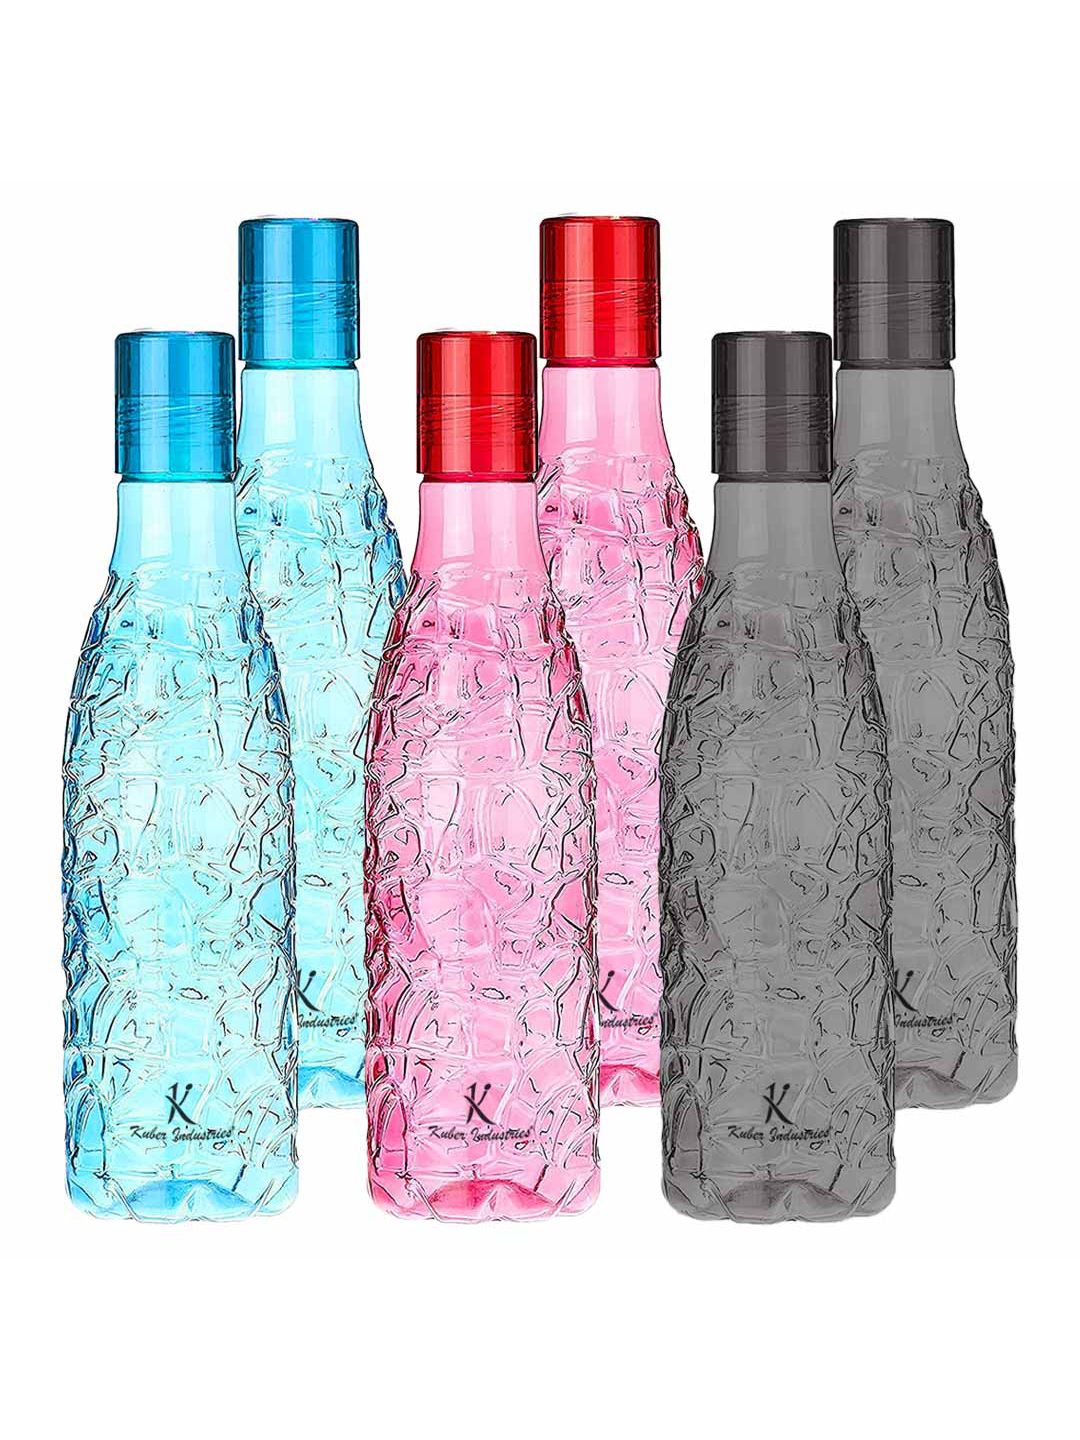 Kuber Industries Set of 6 BPA Free Round Ice Cut Plastic Refrigerator Bottles Price in India